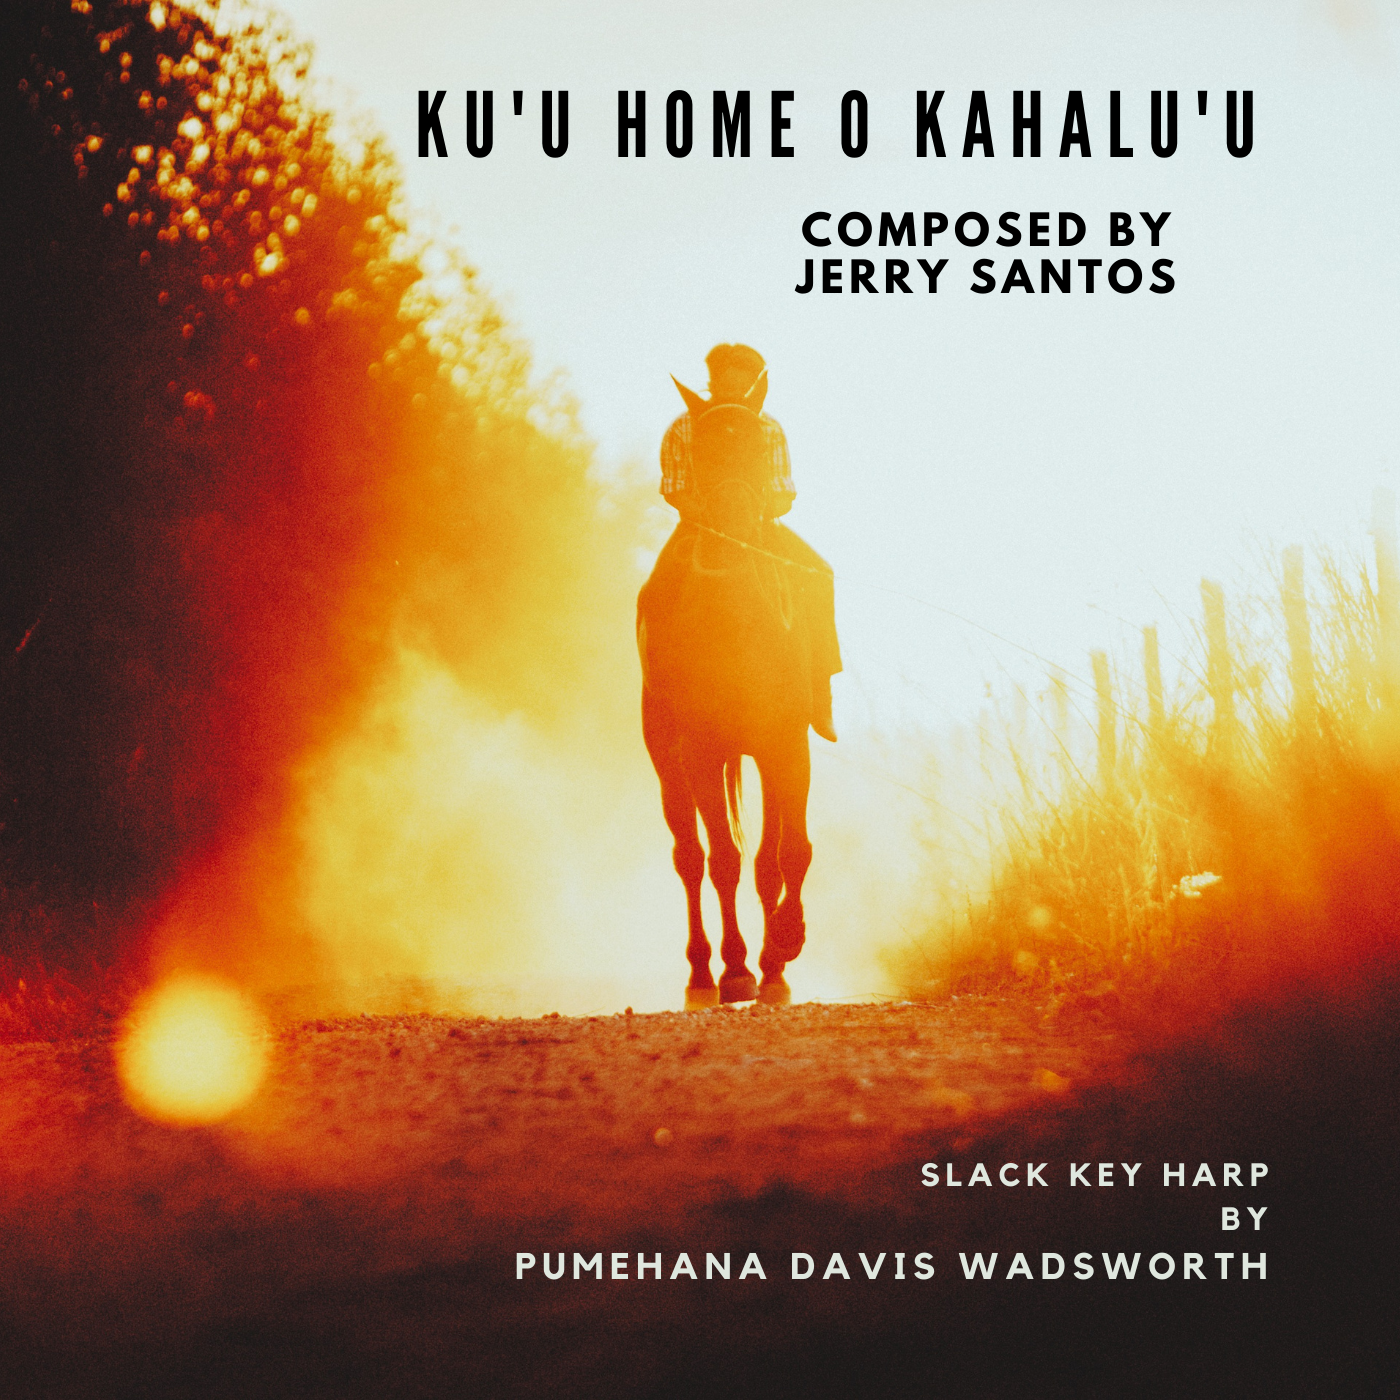 Bringing Hawaiian Slack Key Harp To Centre Stage - Rising Talent Pumehana Davis Wadsworth Unveils Captivating New Single